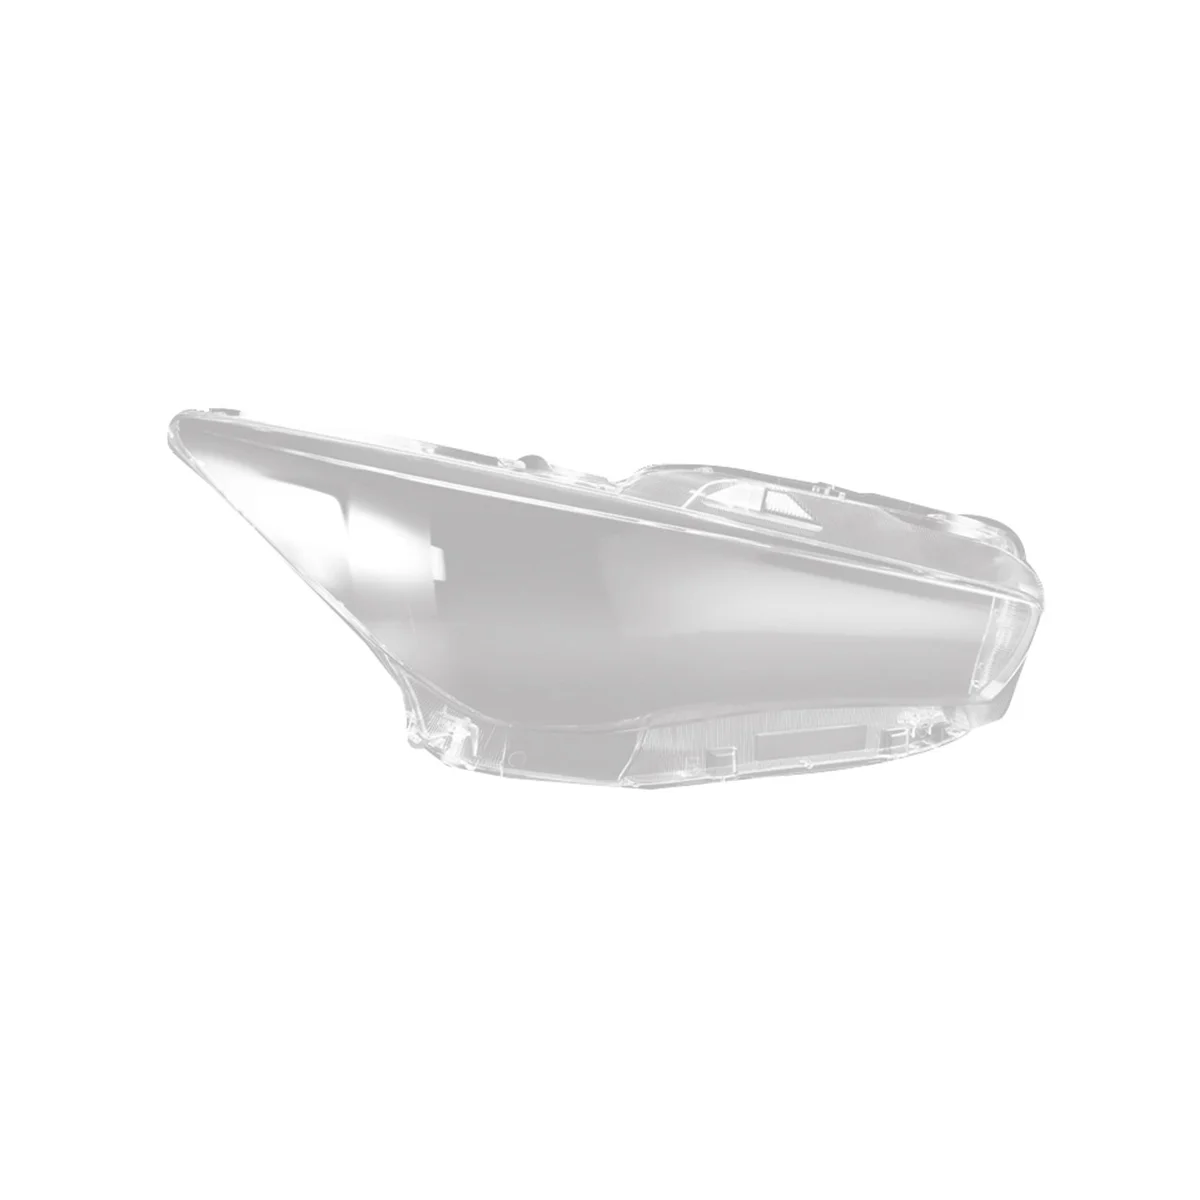 

Передняя правая лампа для головного света, прозрачная фара Gl, объектив для передней фары для Infiniti Q50 2014-2021